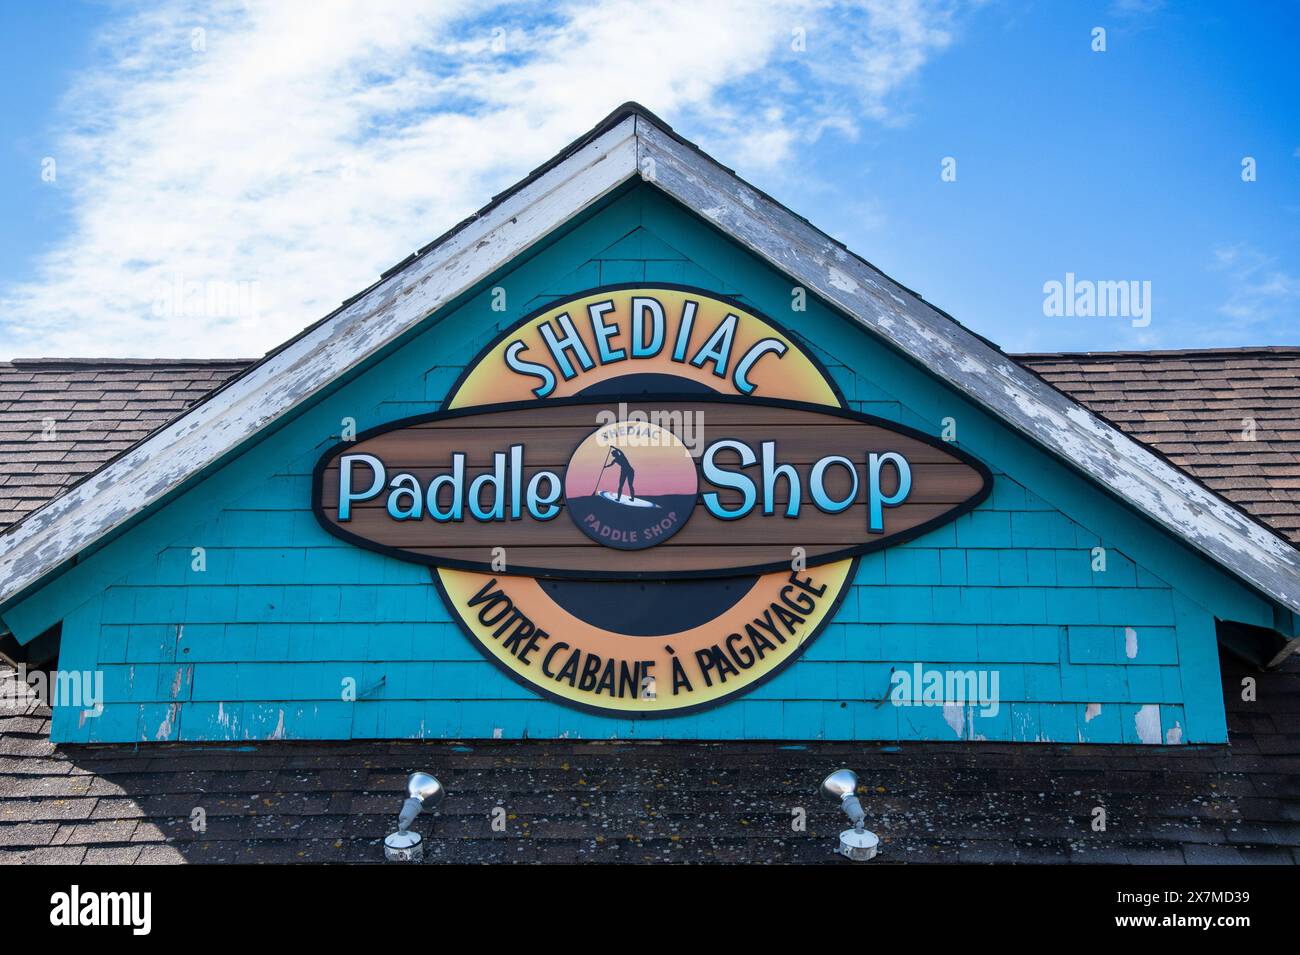 Shediac Paddle Shop sign in New Brunswick, Canada Stock Photo